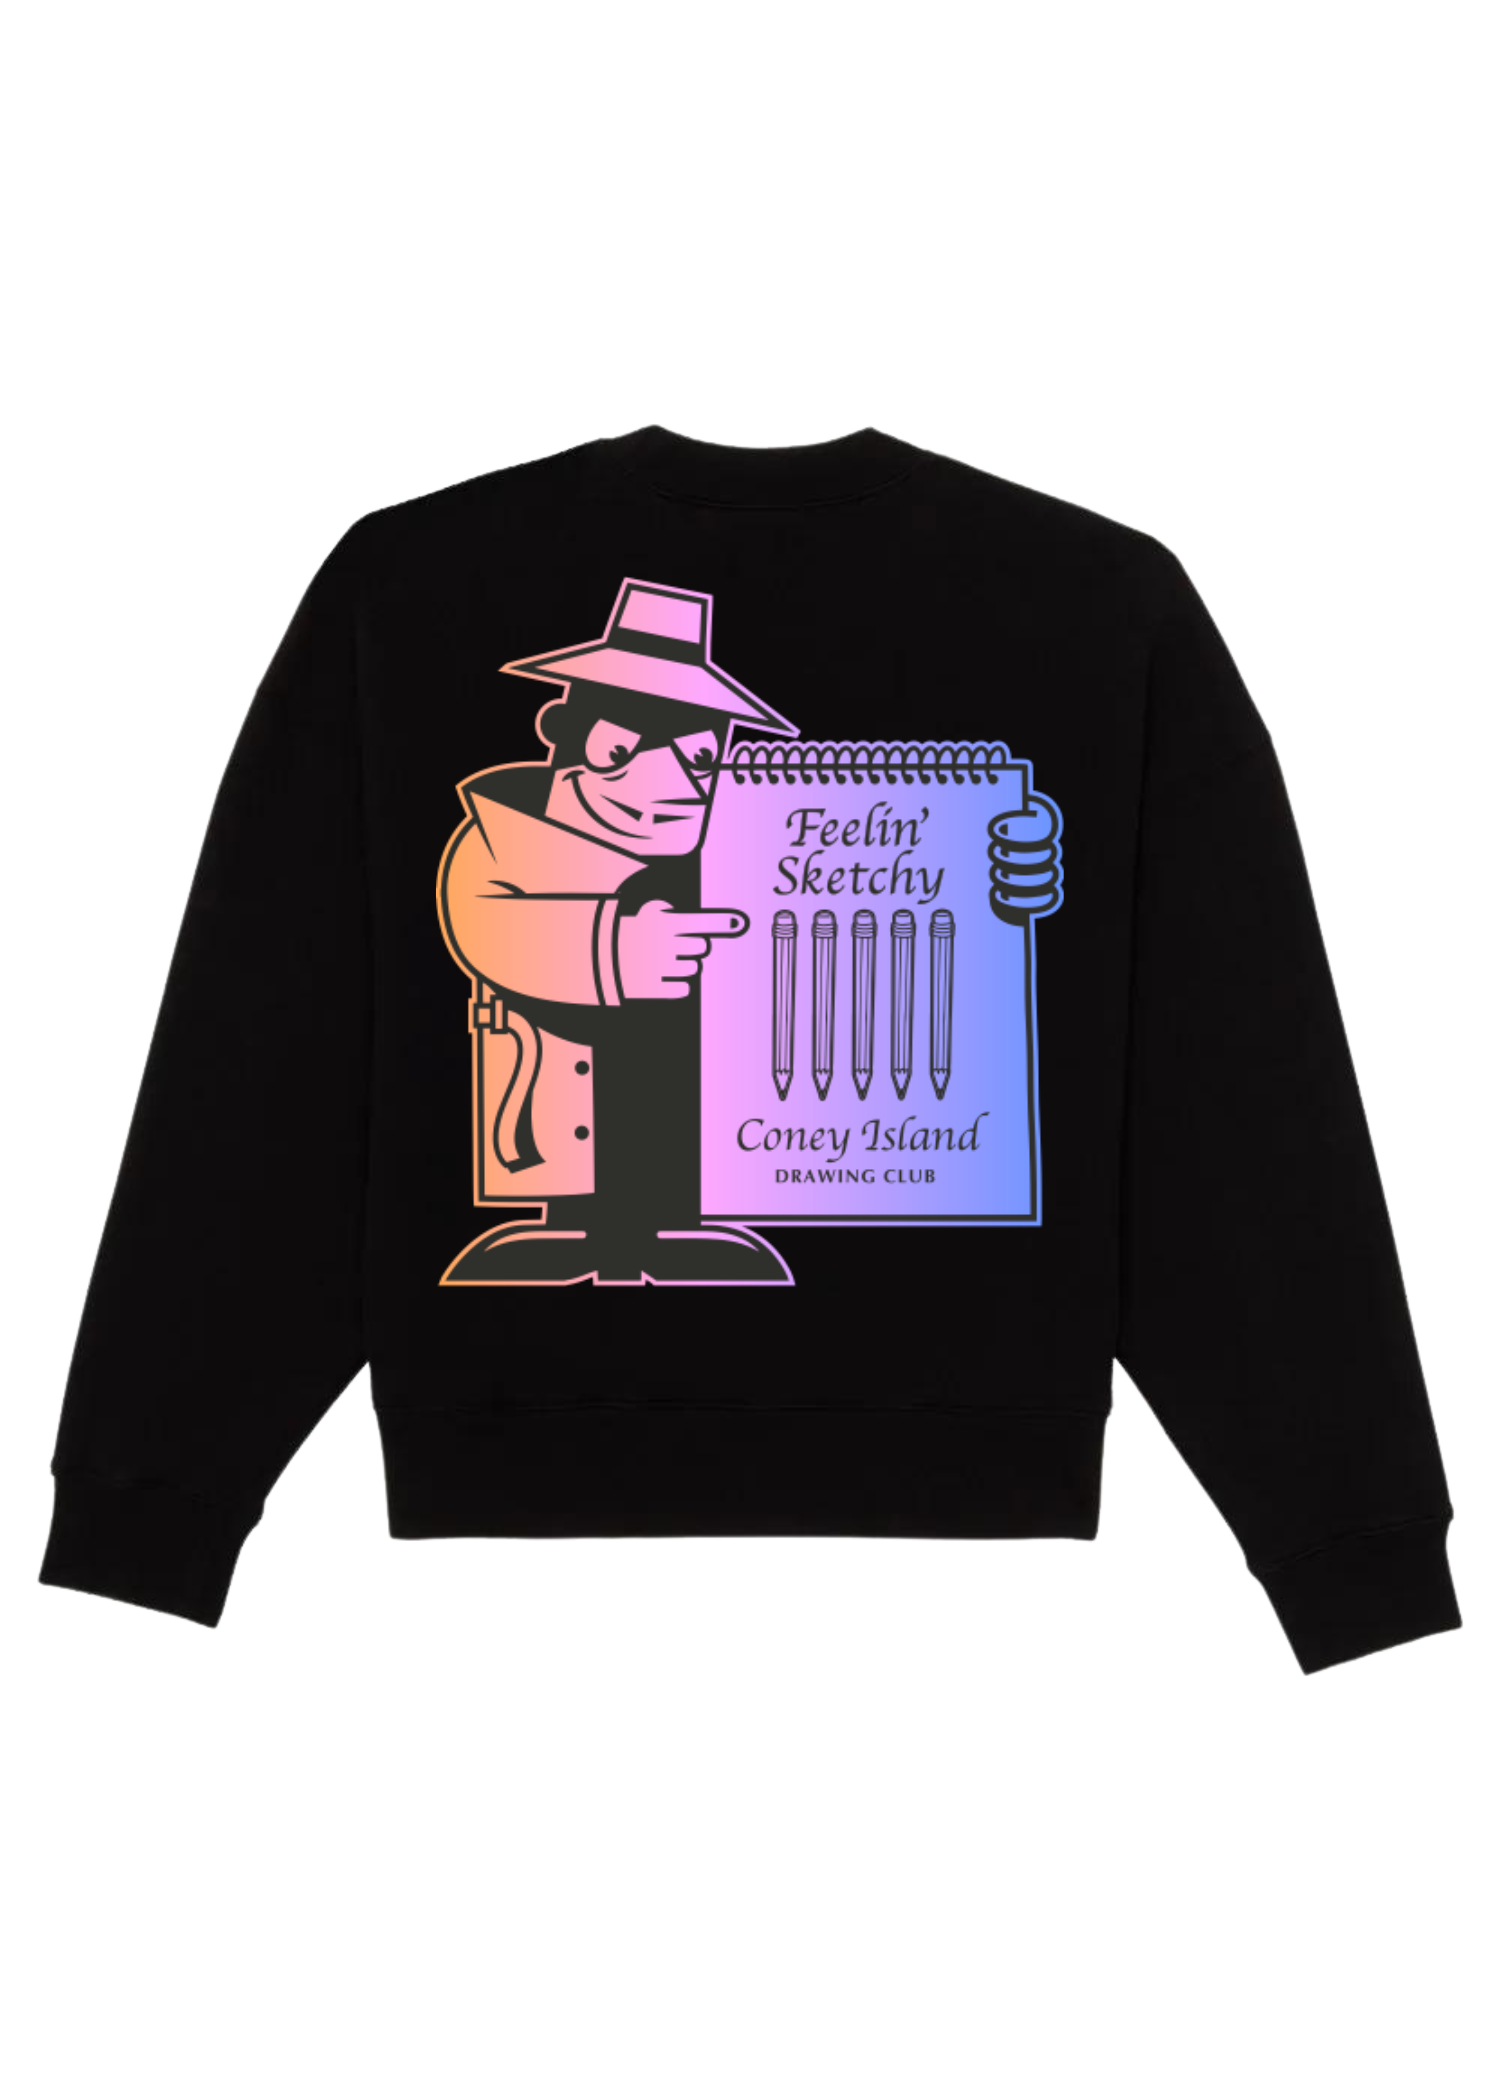 Coney Island Drawing Club Graphic Sweatshirt